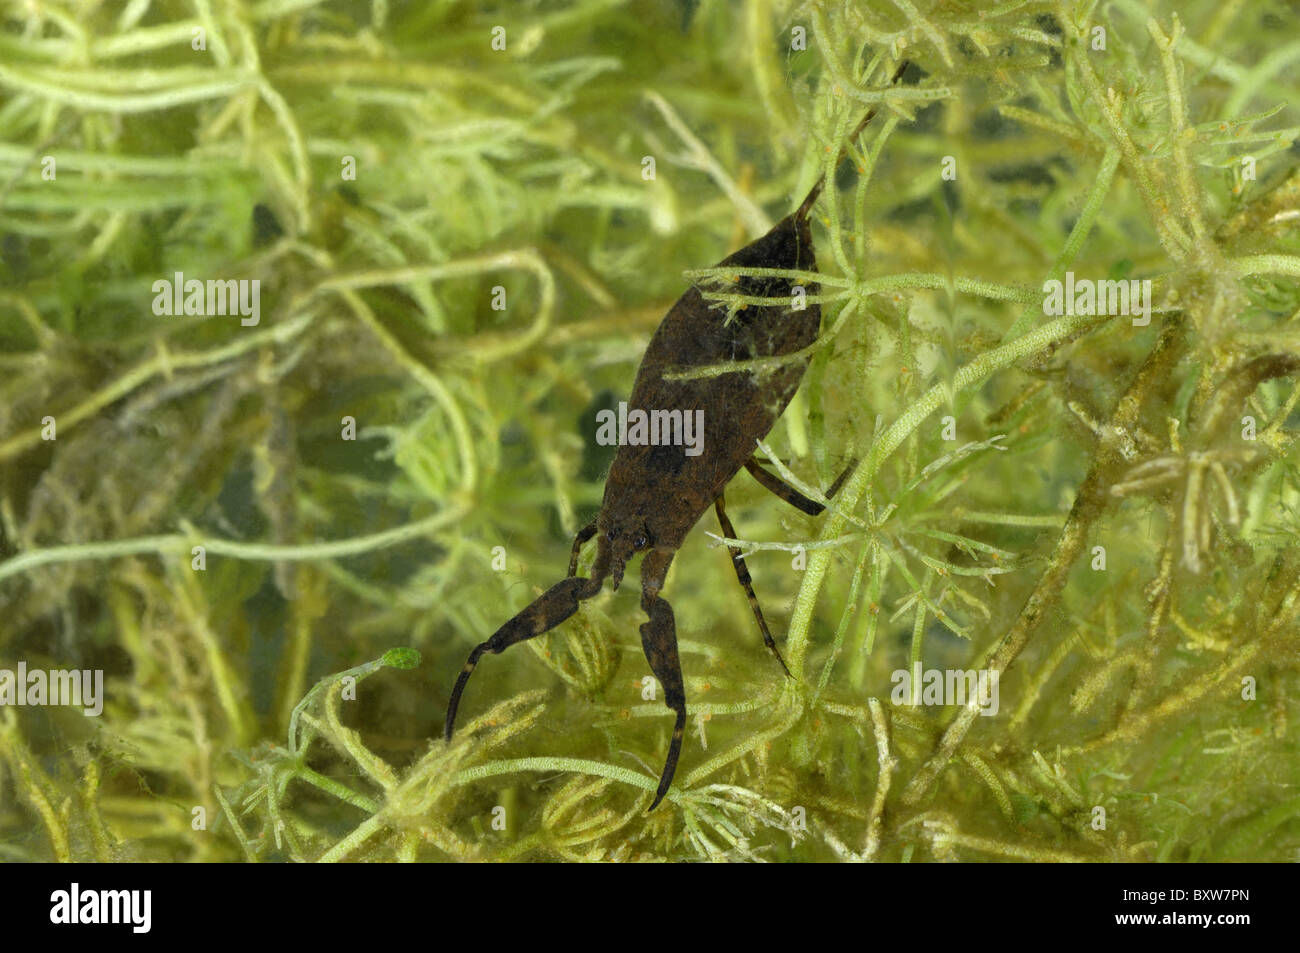 Water scorpion (Nepa cinerea) swimming in a pond - Belgium Stock Photo